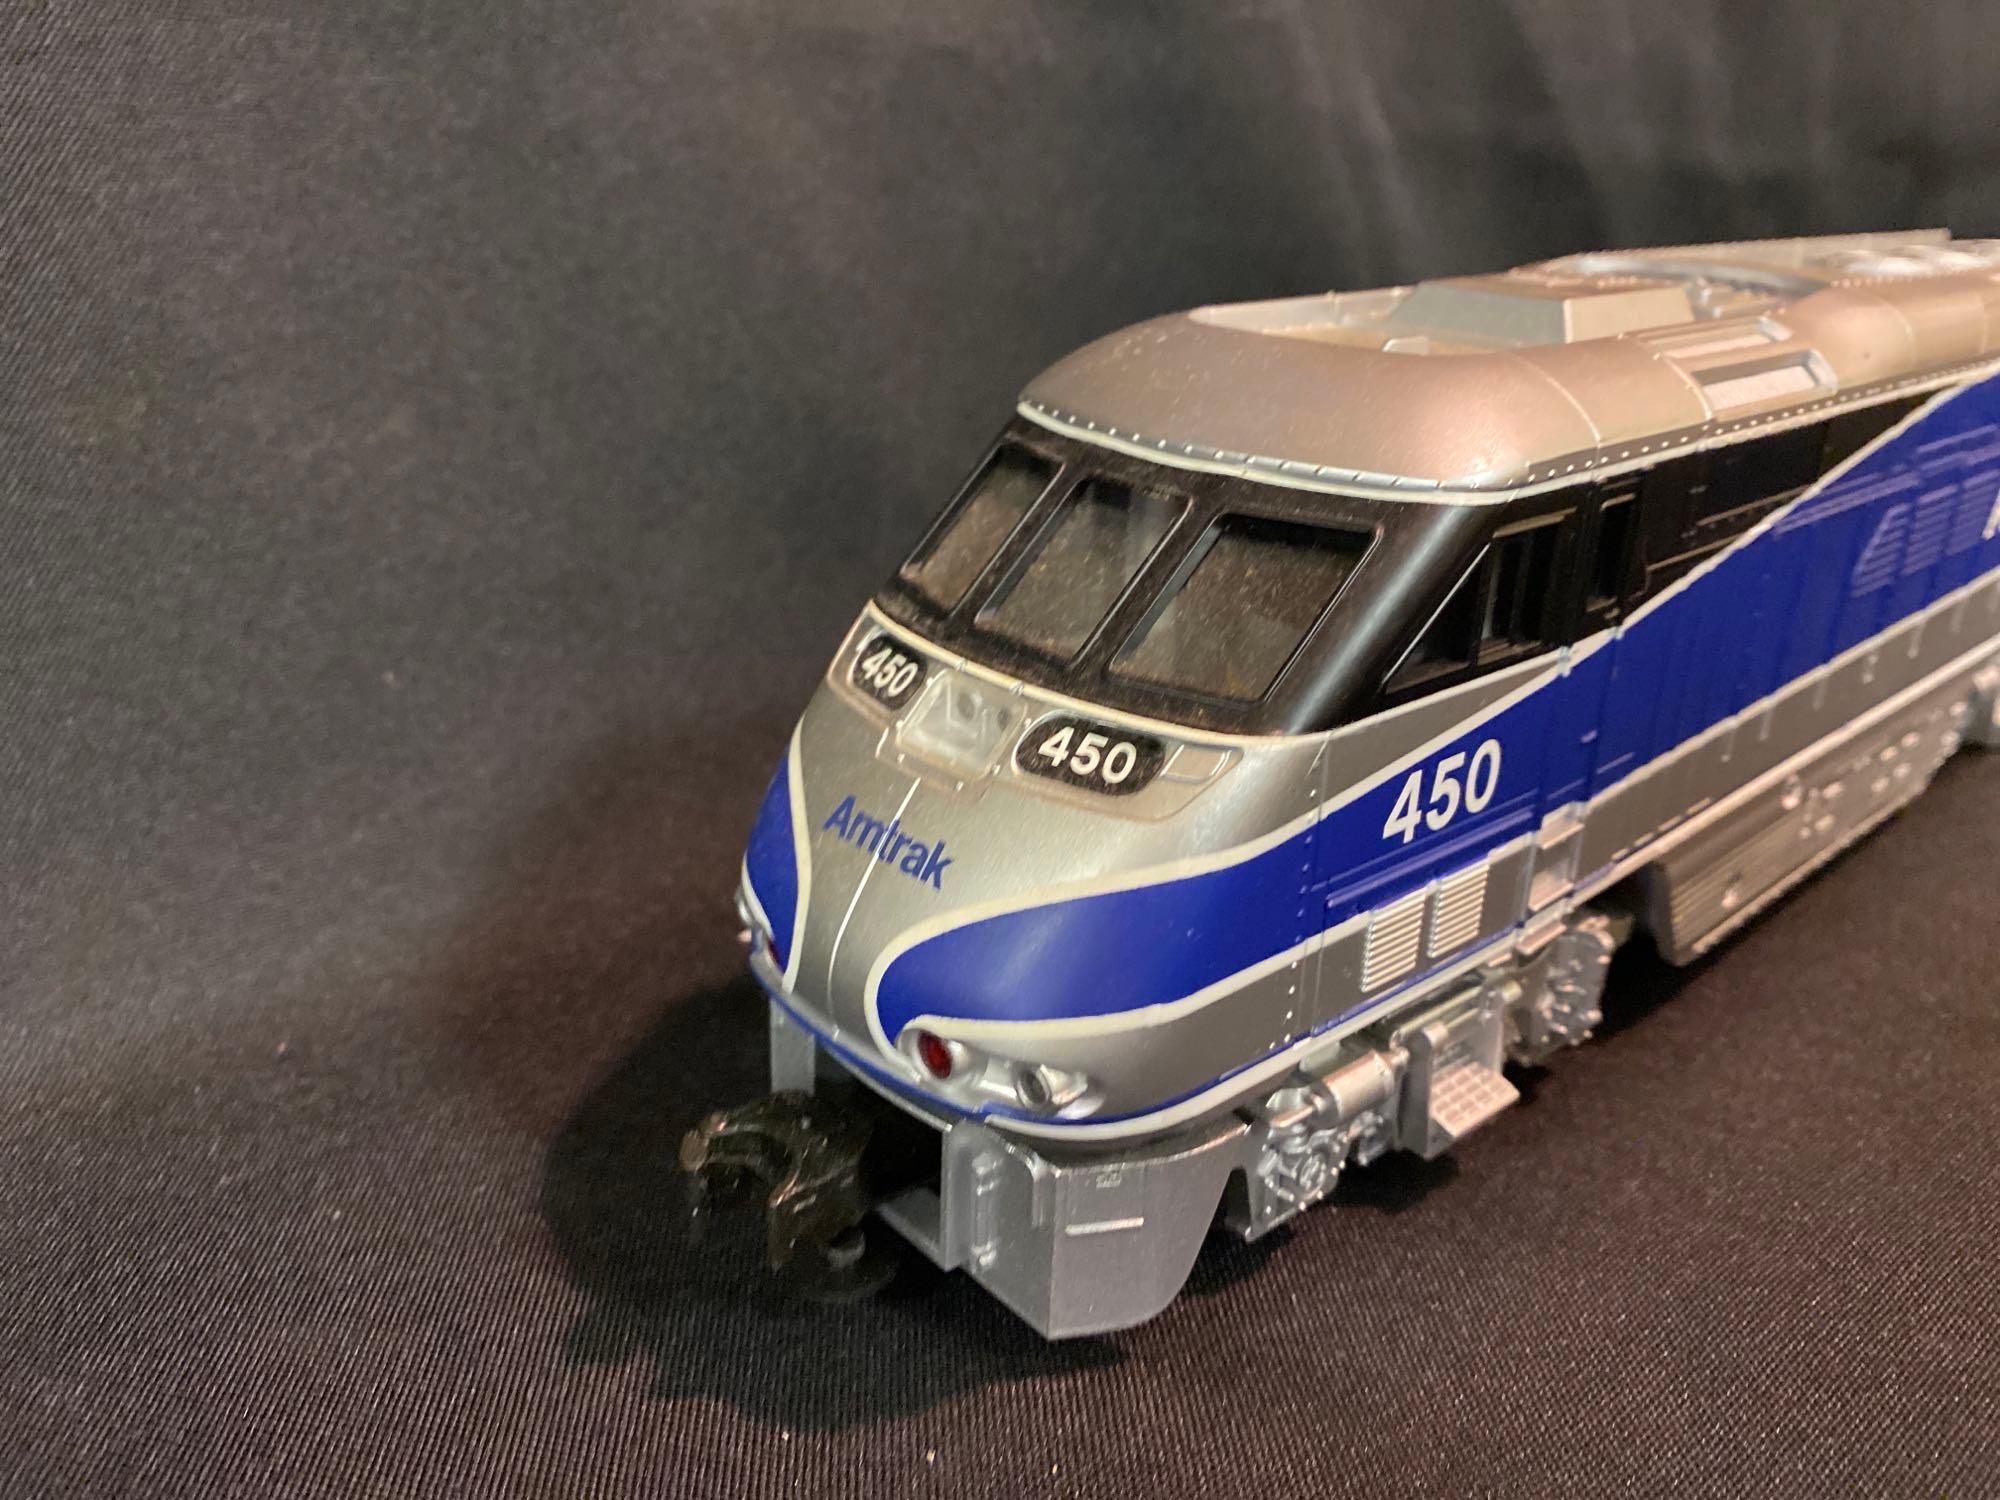 Amtrak Diesel Locomotive W/ (5) Coach Cars